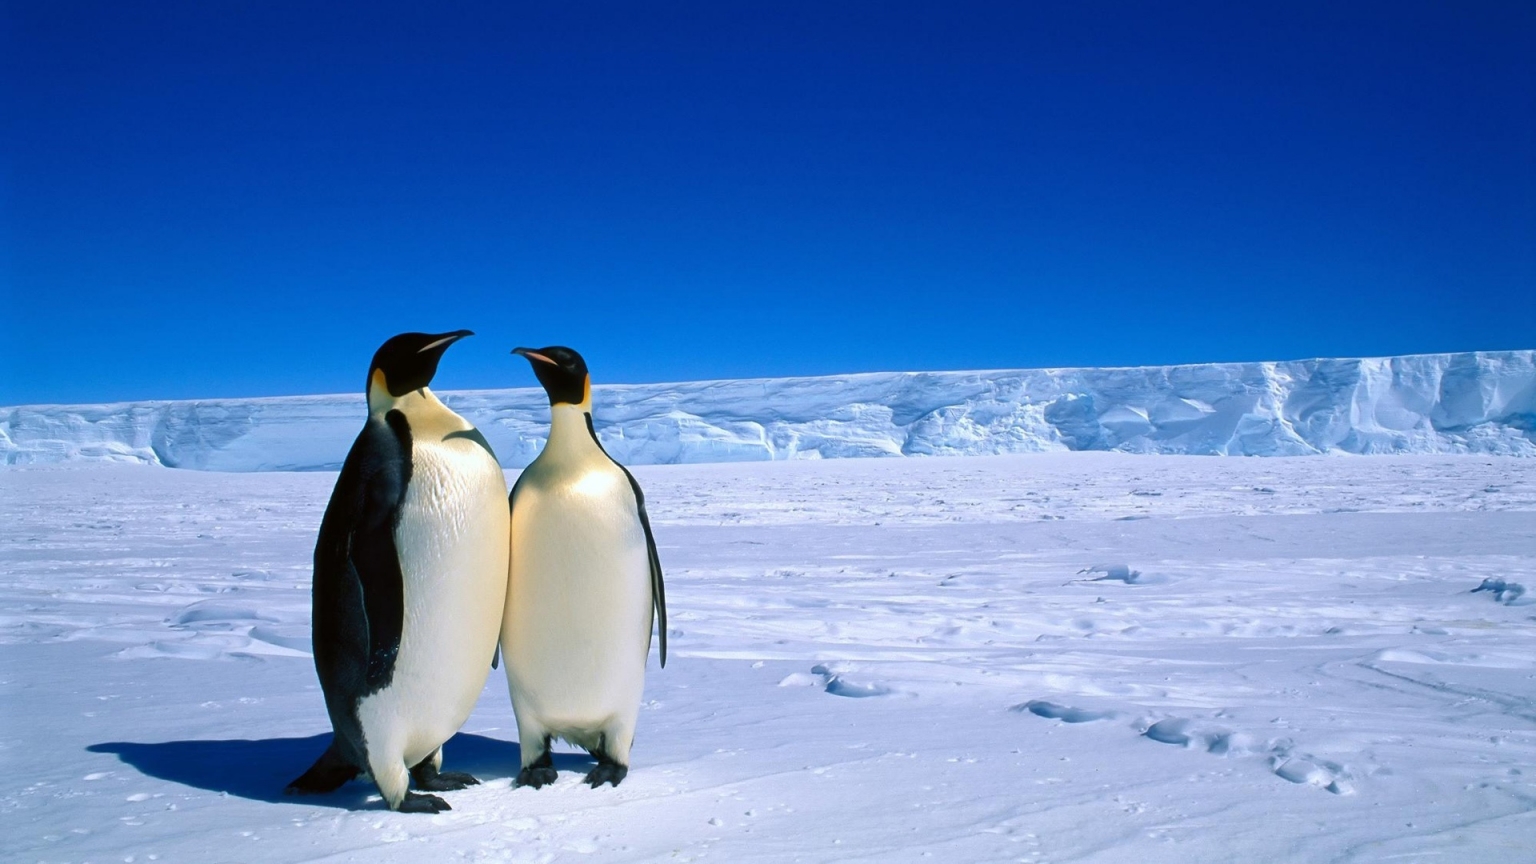 Penguins in Antarctica for 1536 x 864 HDTV resolution